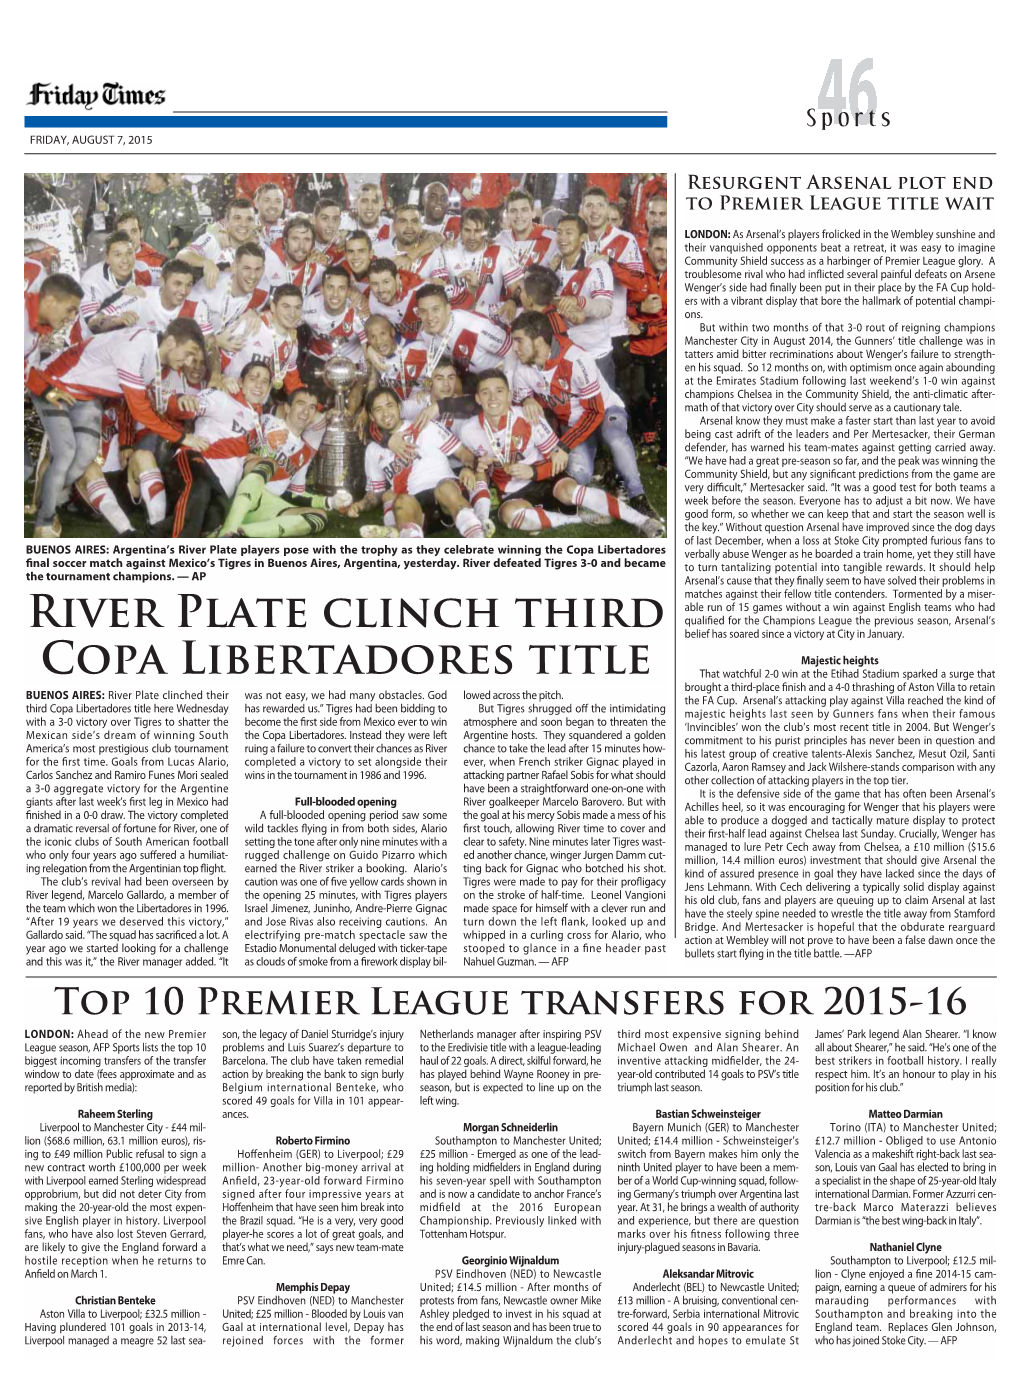 River Plate Clinch Third Copa Libertadores Title